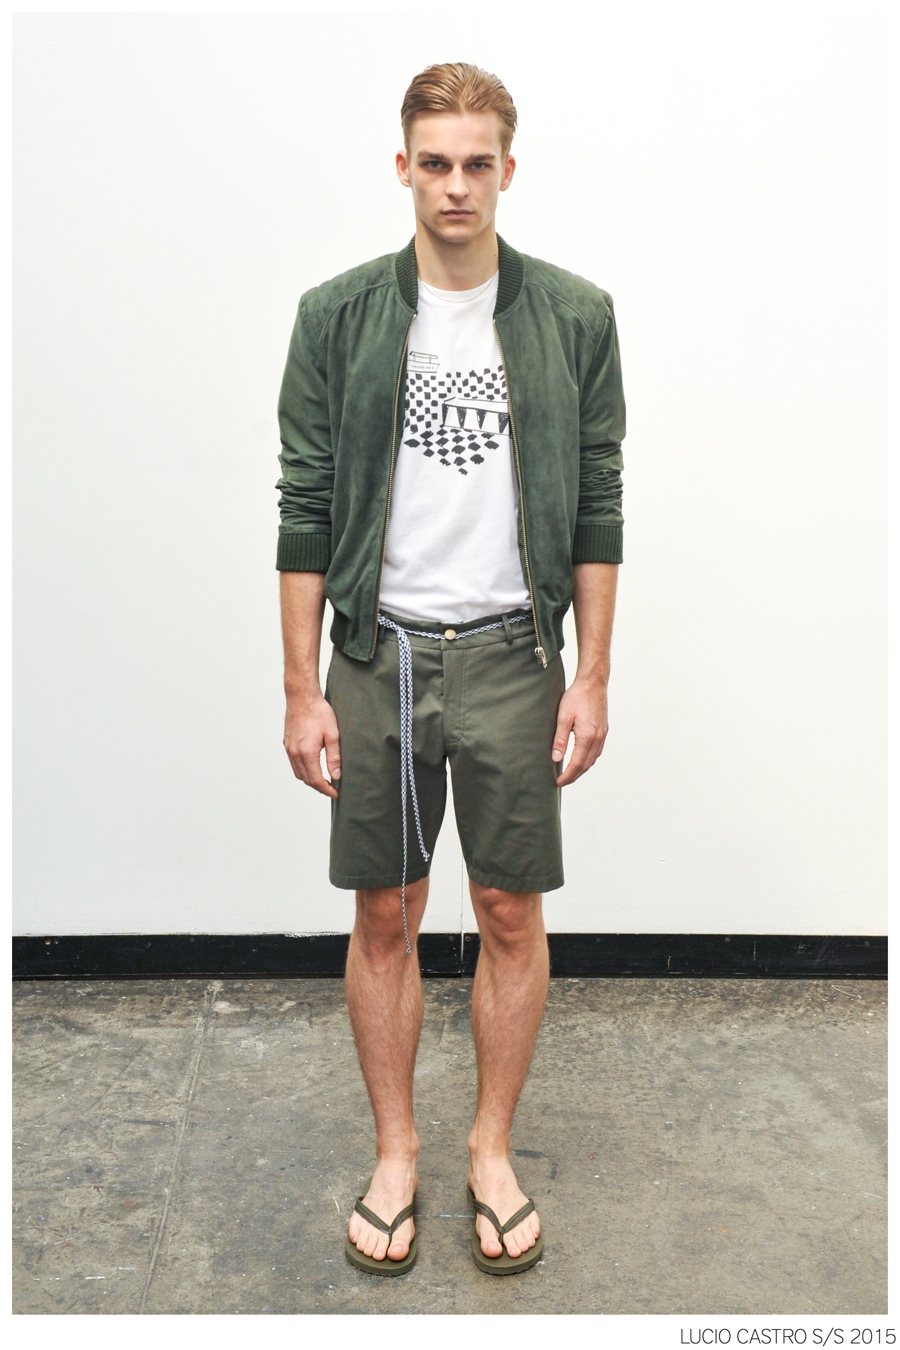 Lucio Castro Spring/Summer 2015 | New York Fashion Week | The Fashionisto